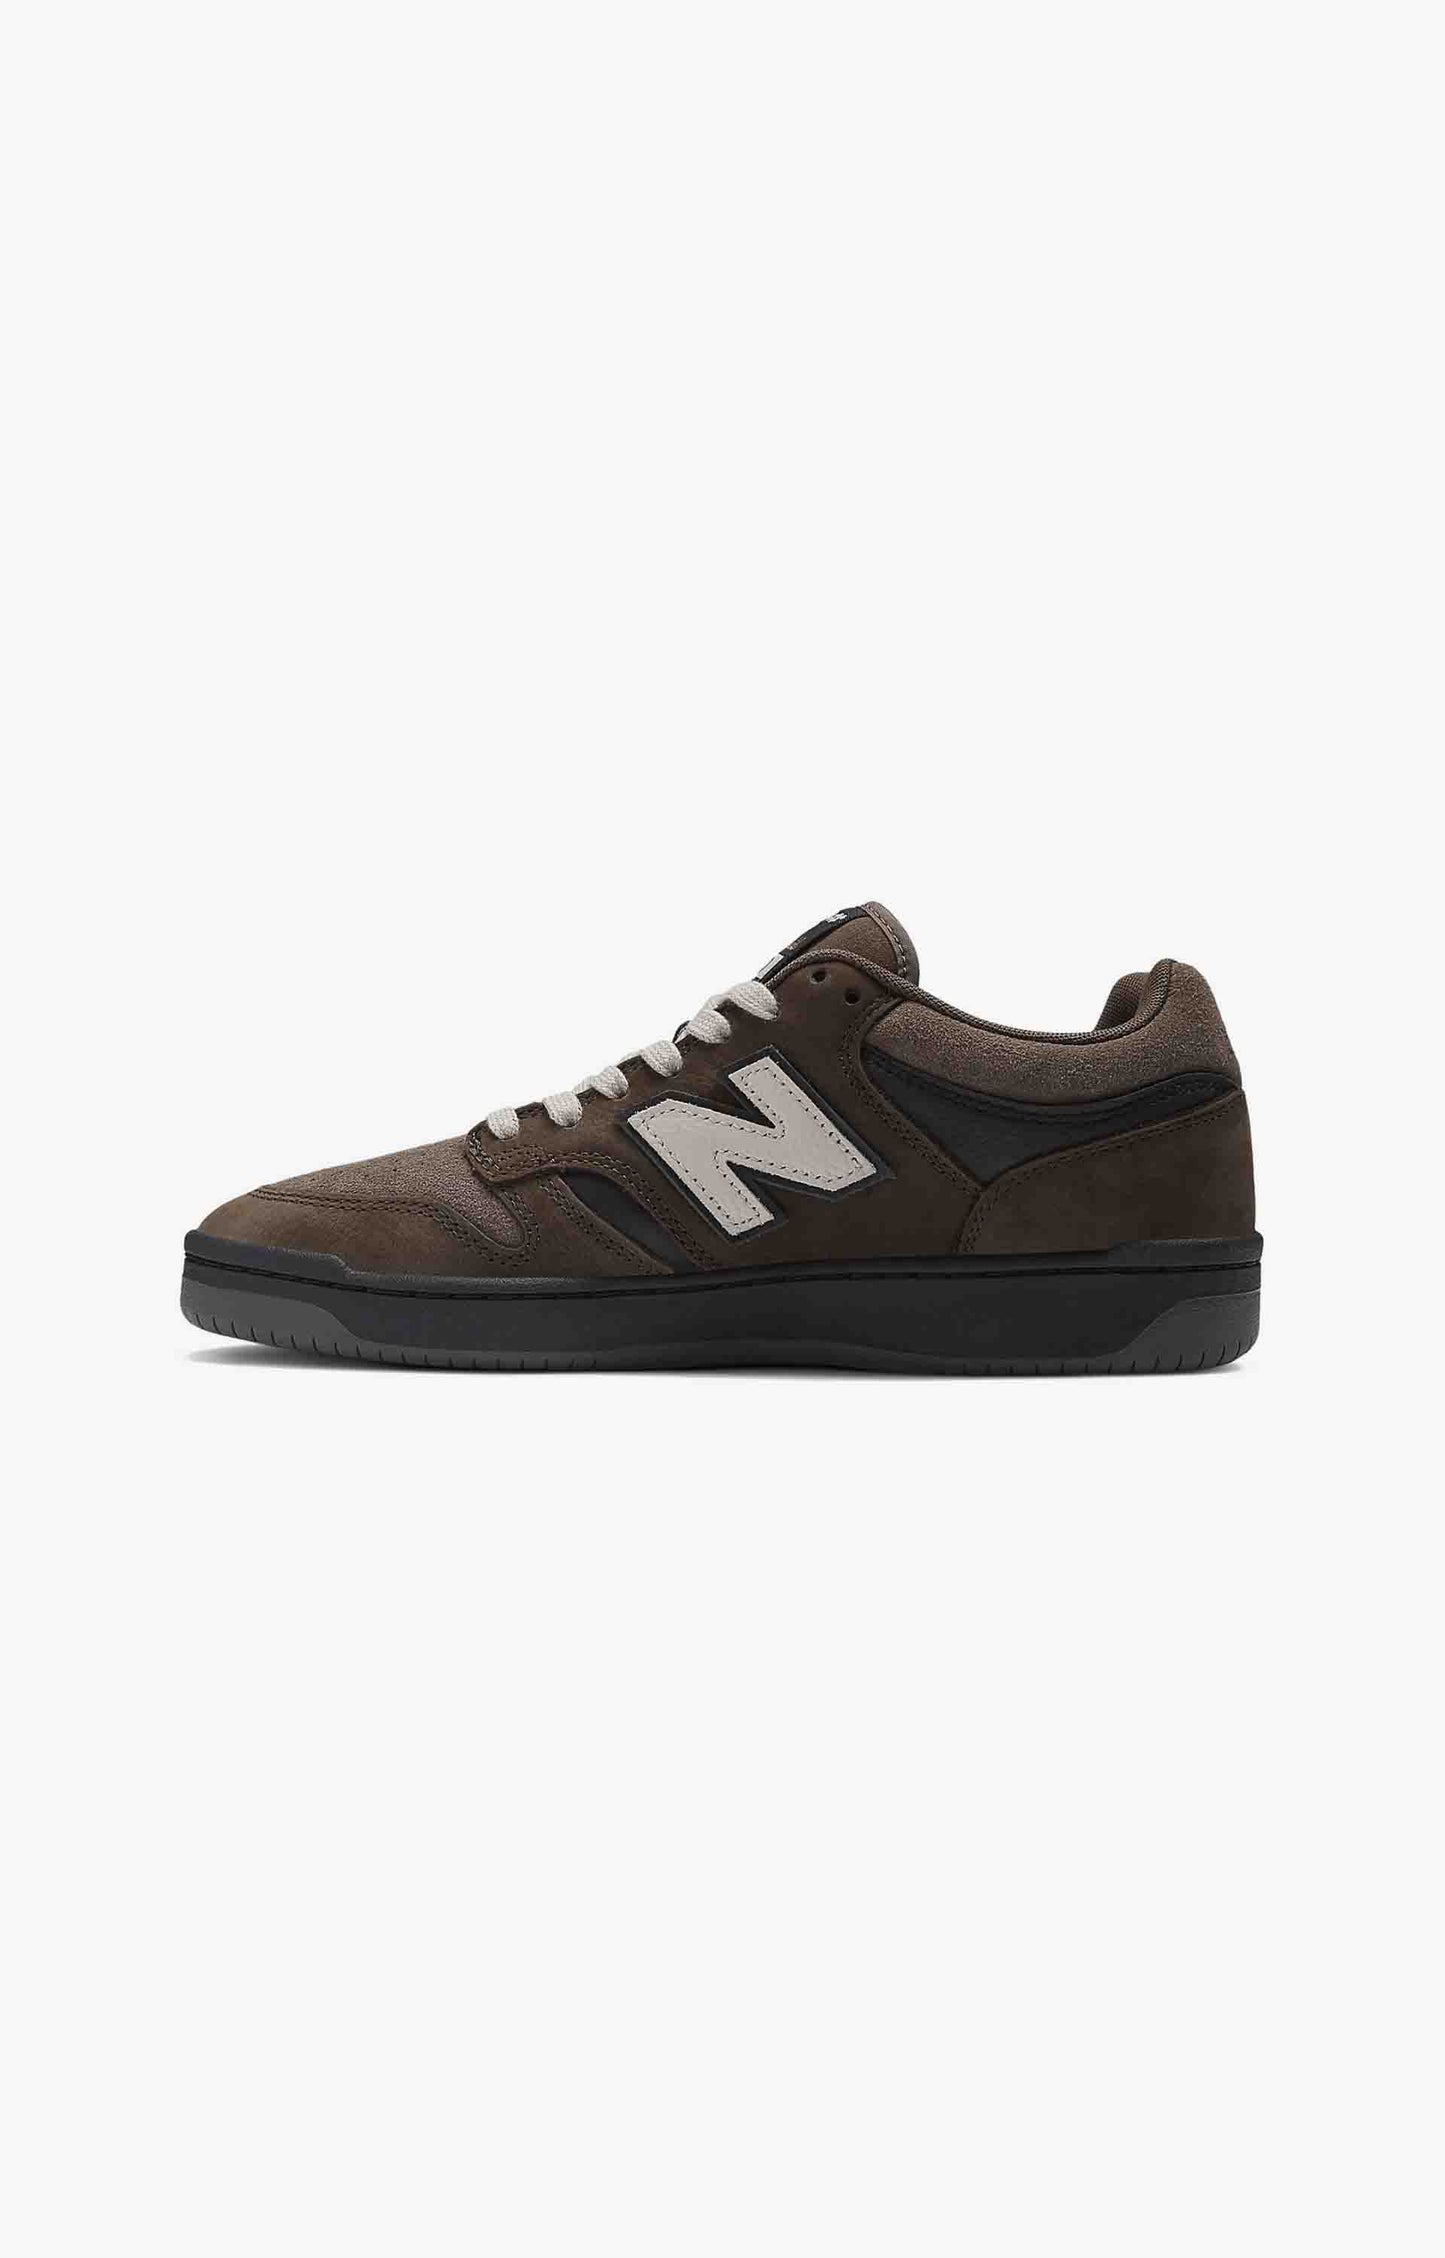 New Balance Numeric NM480BOS Shoe, Chocolate/Tan